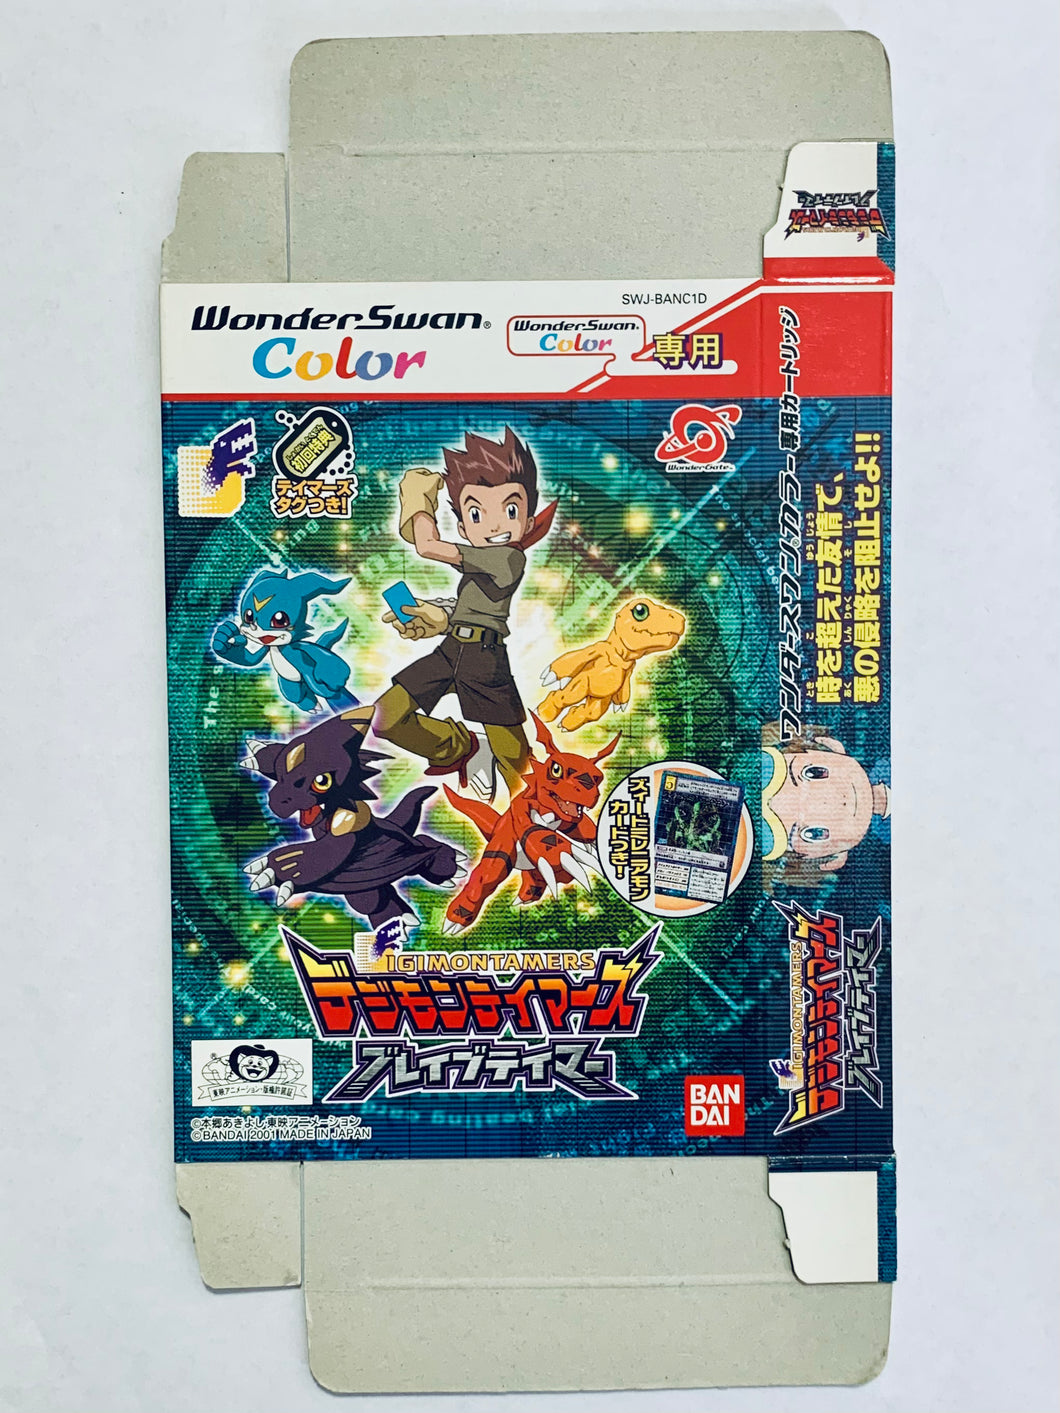 Digimon Tamers: Brave Tamer - WonderSwan Color - WSC - JP - Box Only (SWJ-BANC1D)